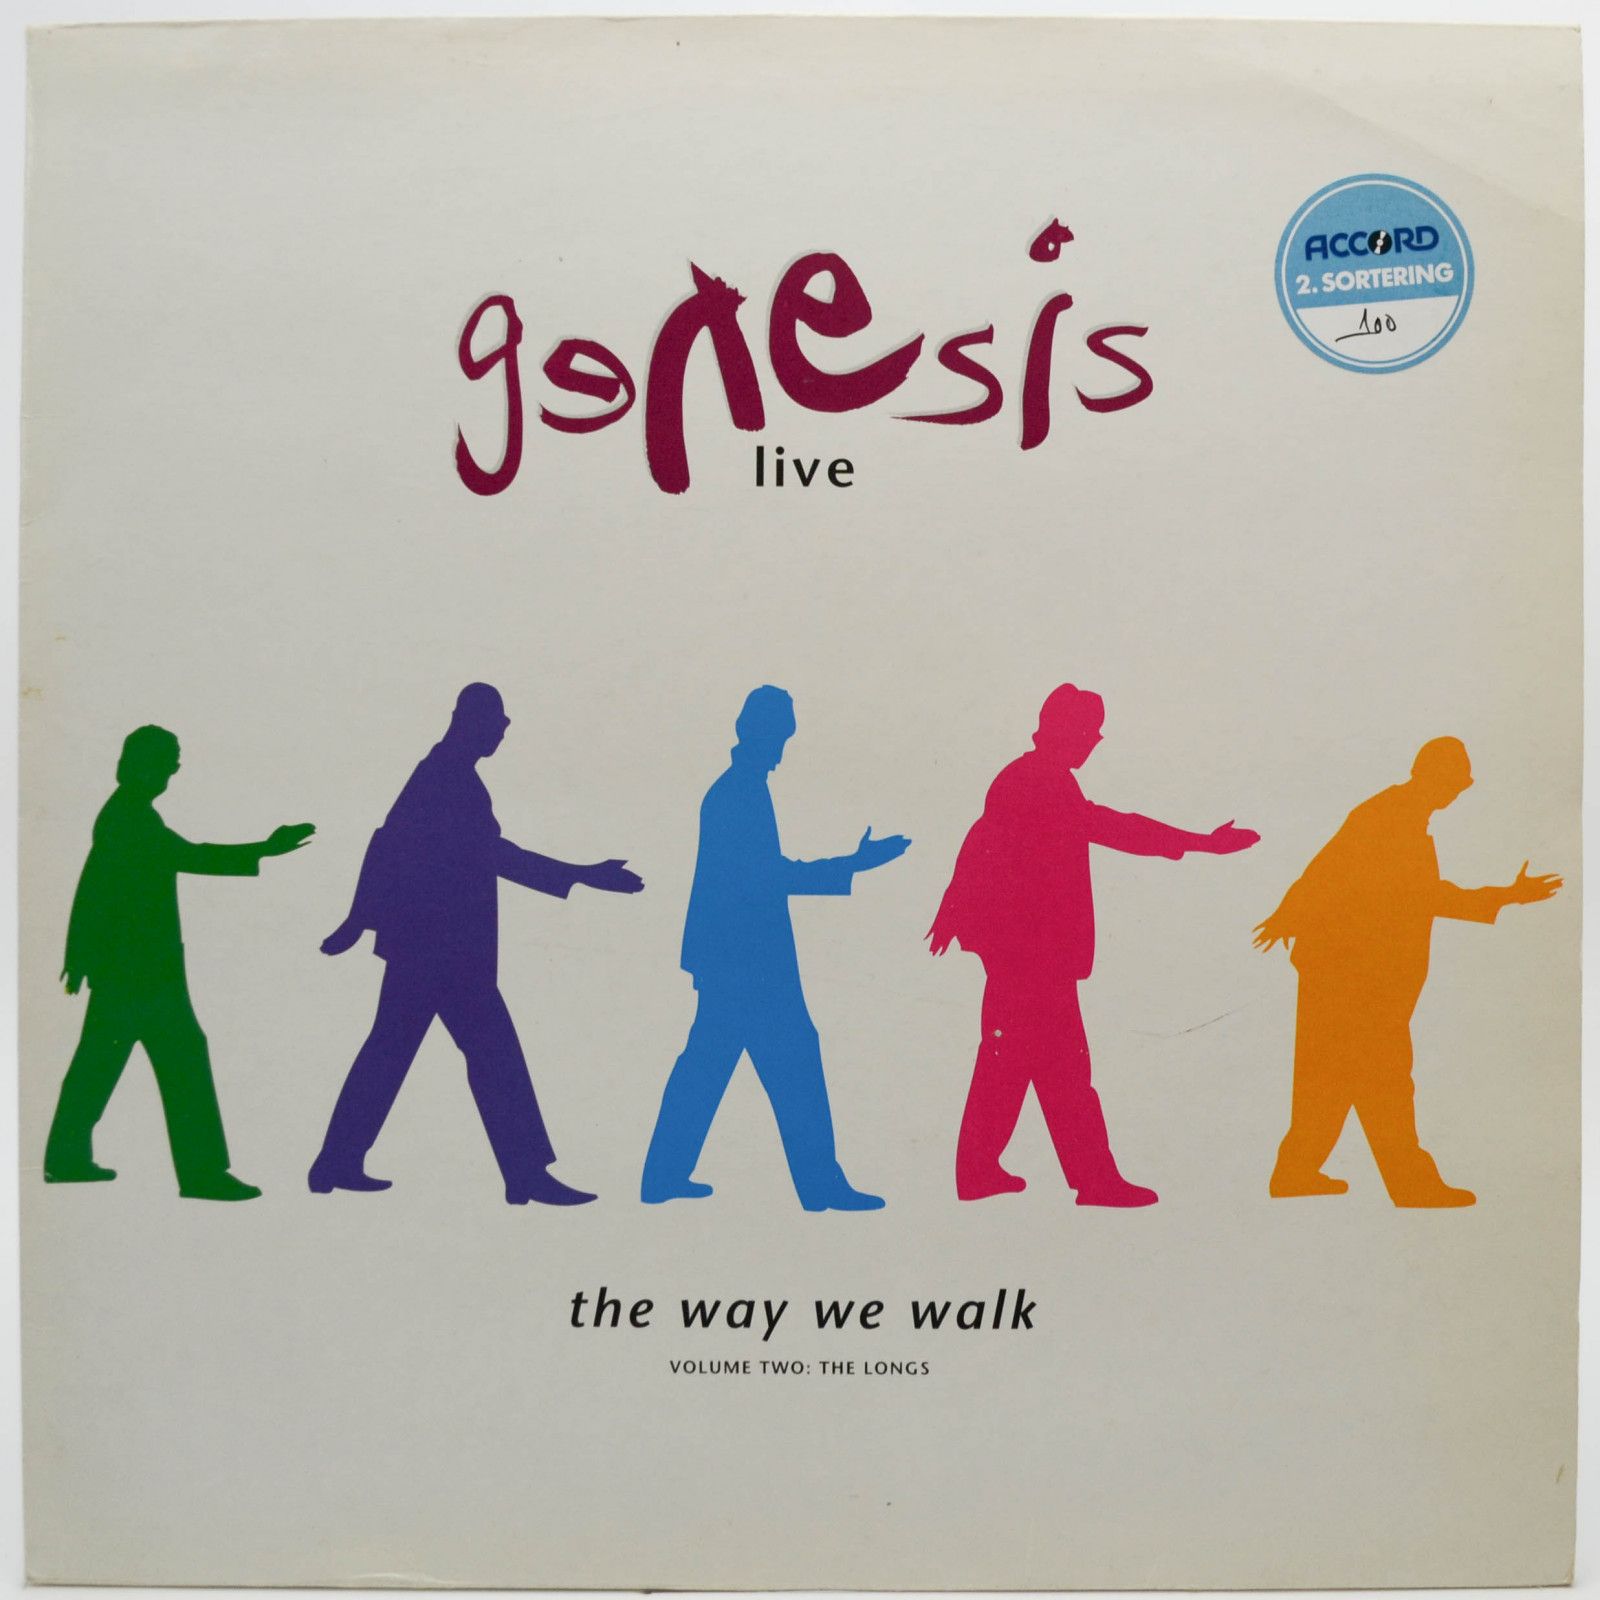 Genesis — Live / The Way We Walk (Volume Two: The Longs), 1993